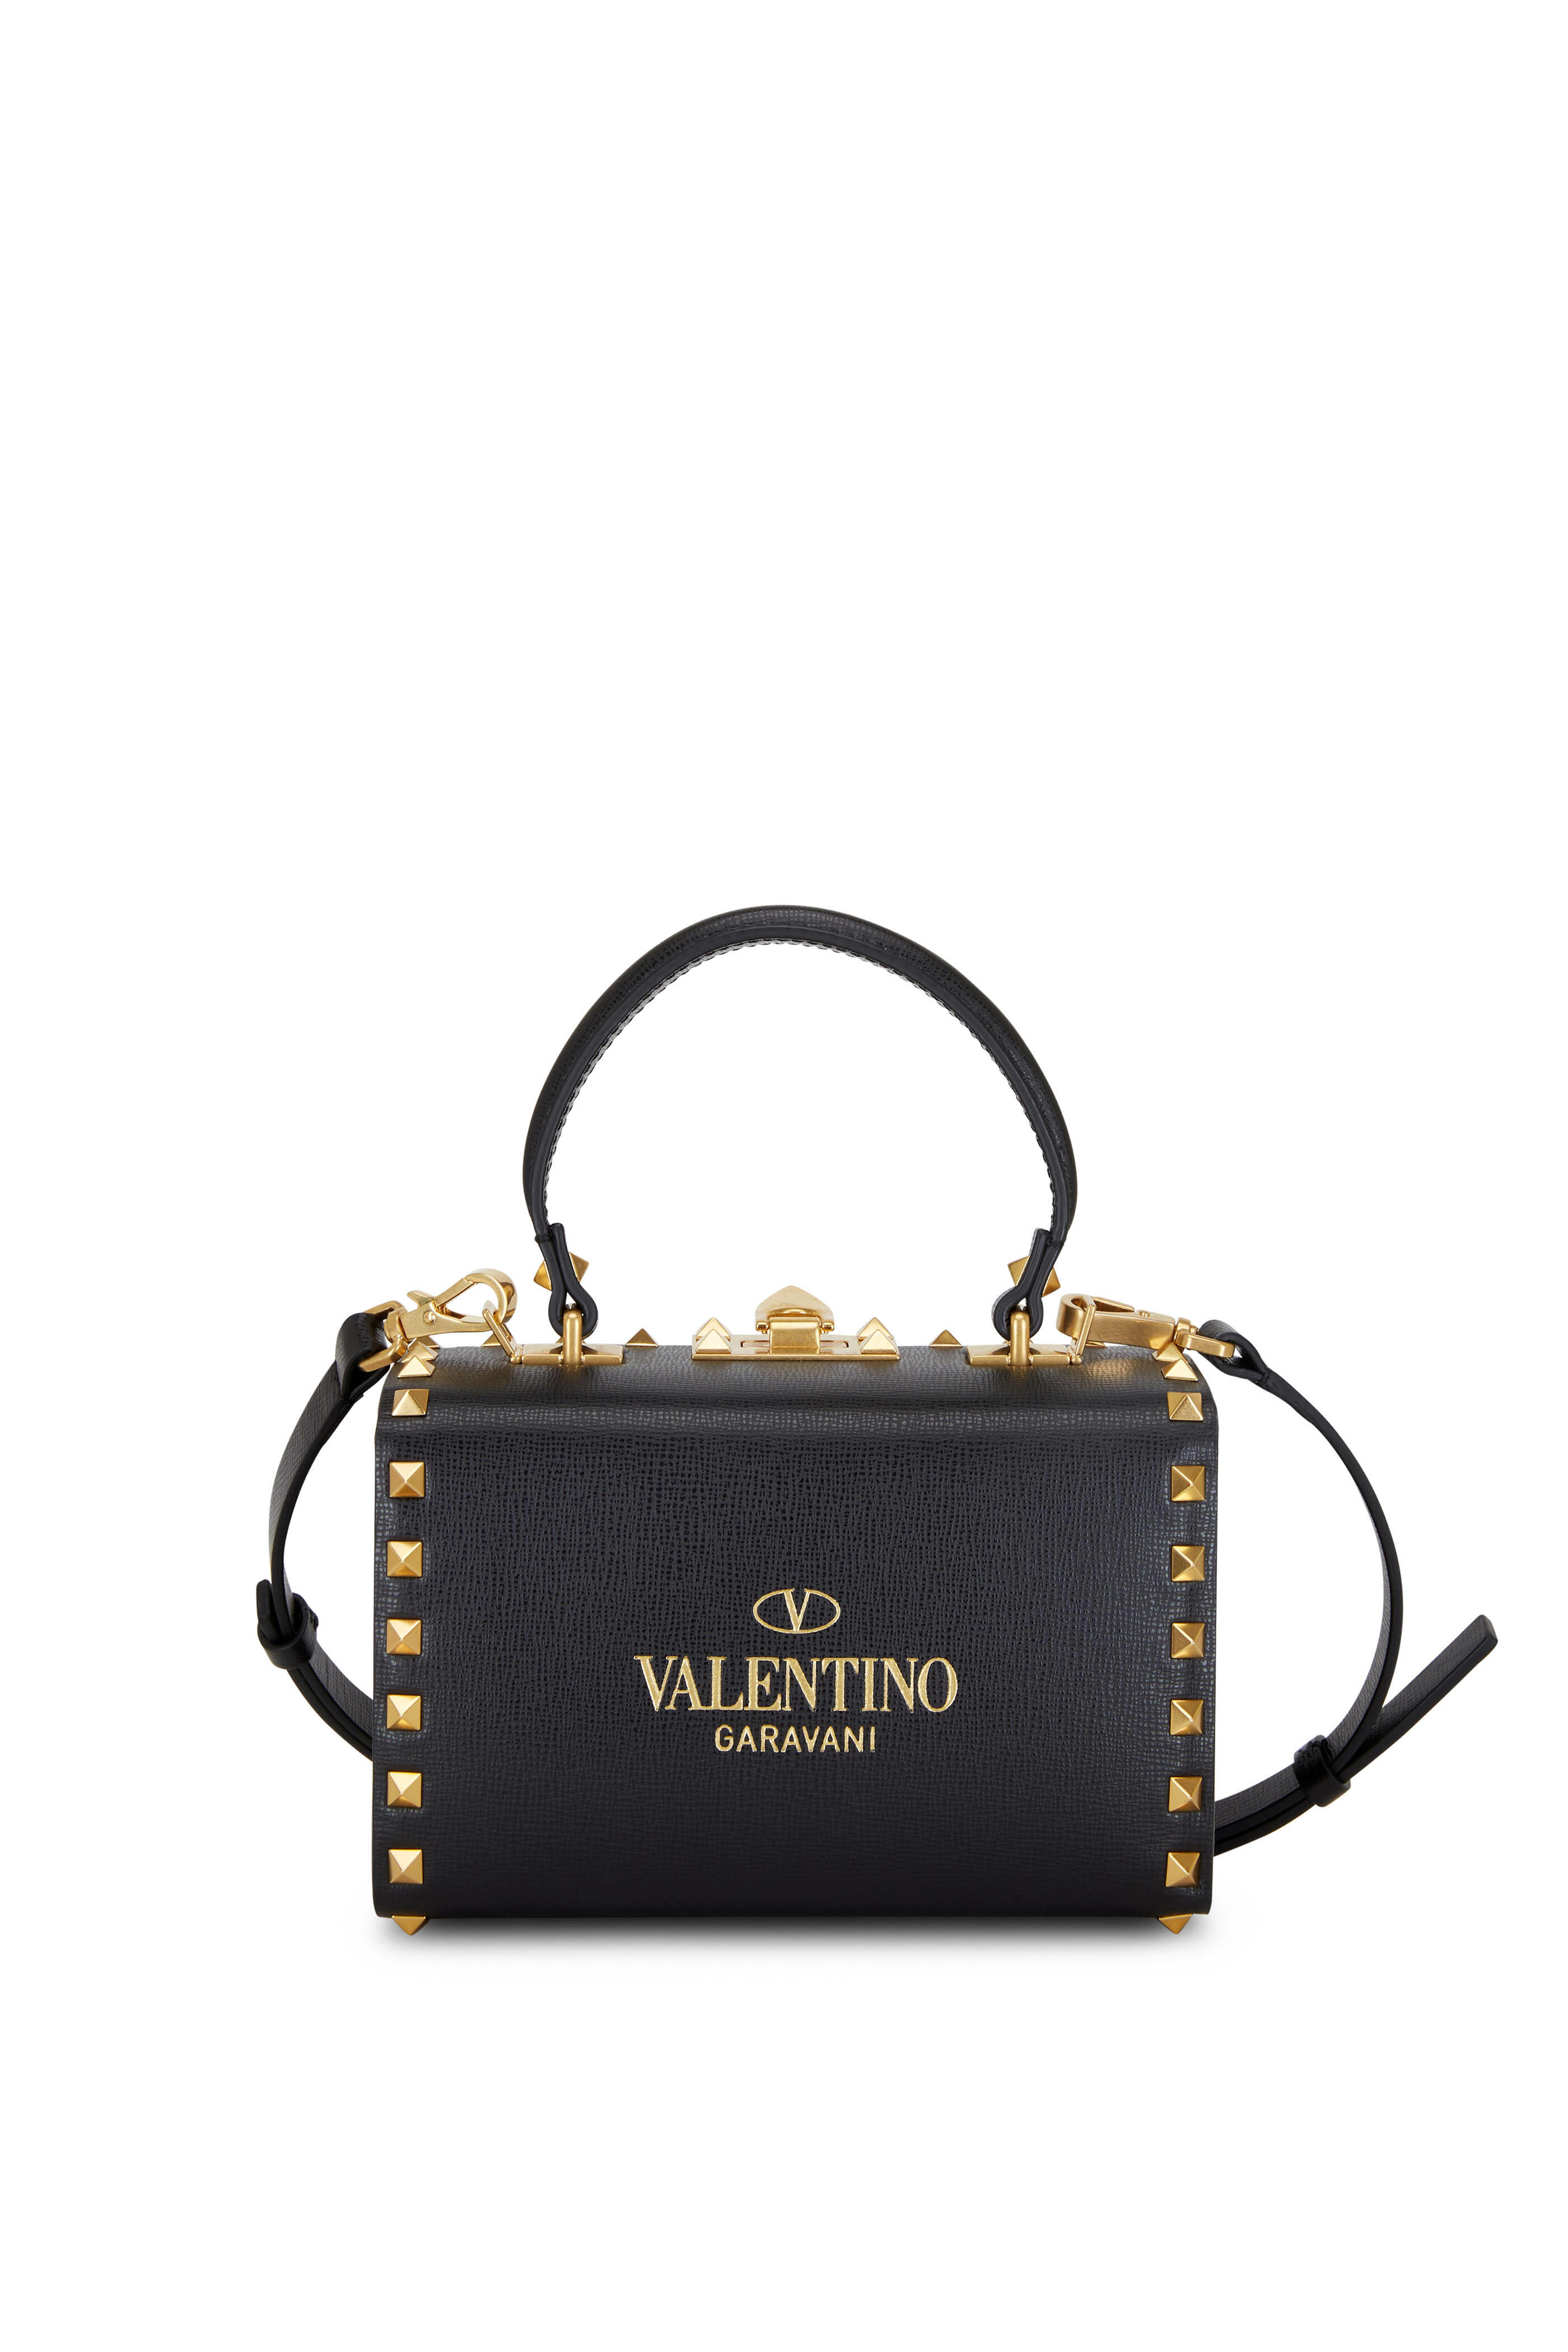 Valentino Garavani Alcove Box Bag